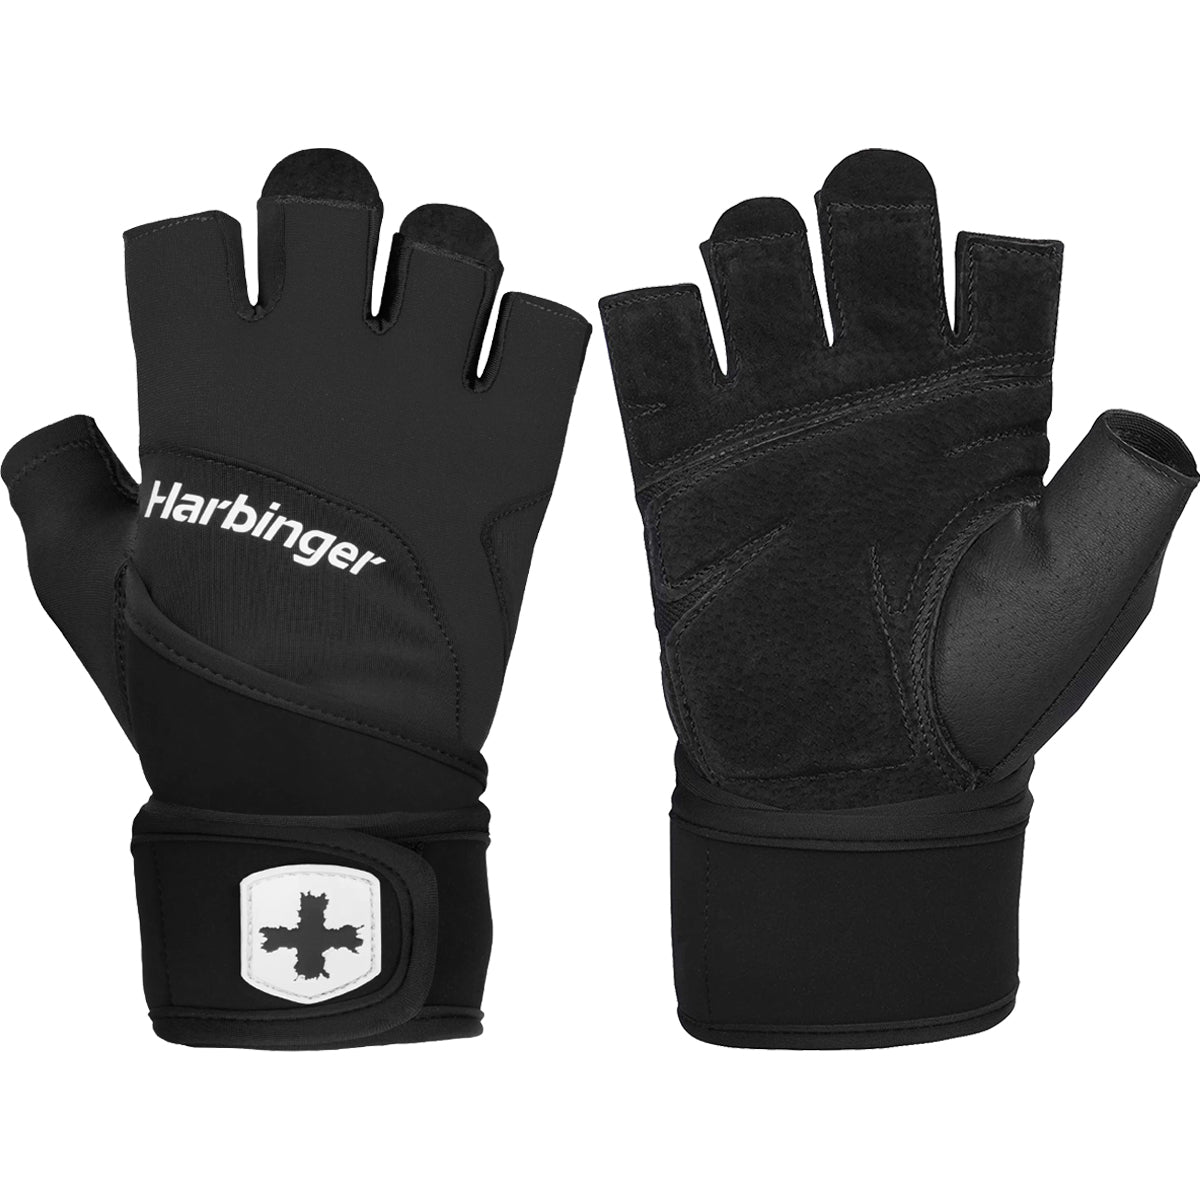 Harbinger Unisex Training Grip Wrist Wrap Weight Lifting Gloves - Black Harbinger